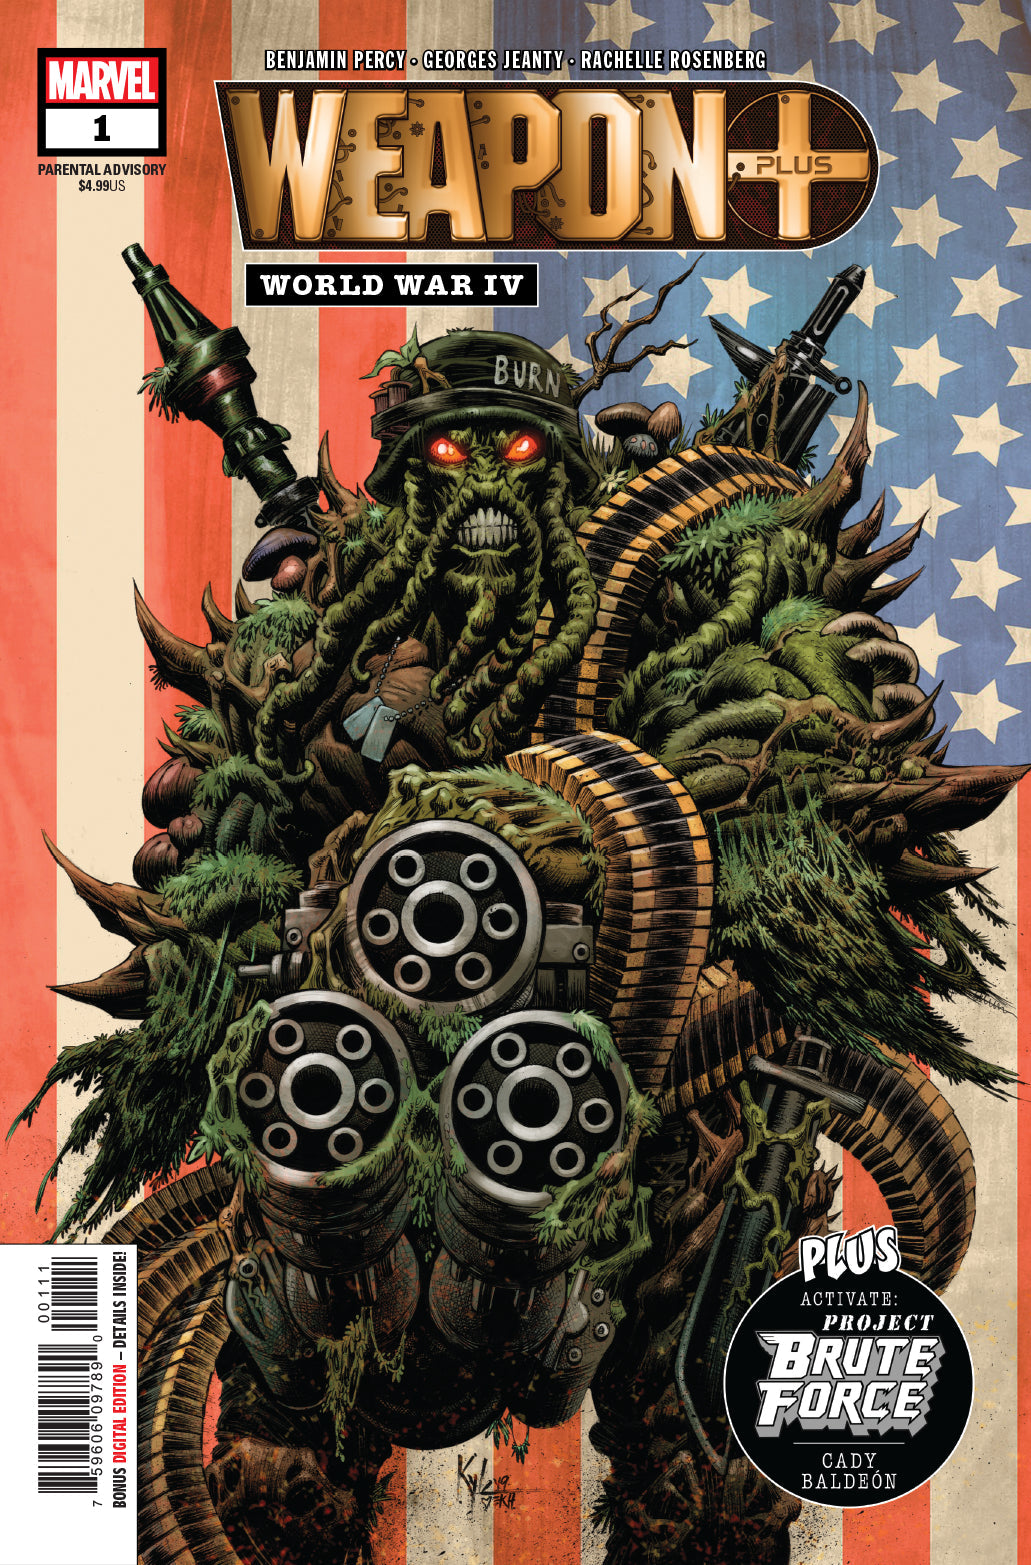 WEAPON PLUS WORLD WAR IV - Comicbookeroo Australia